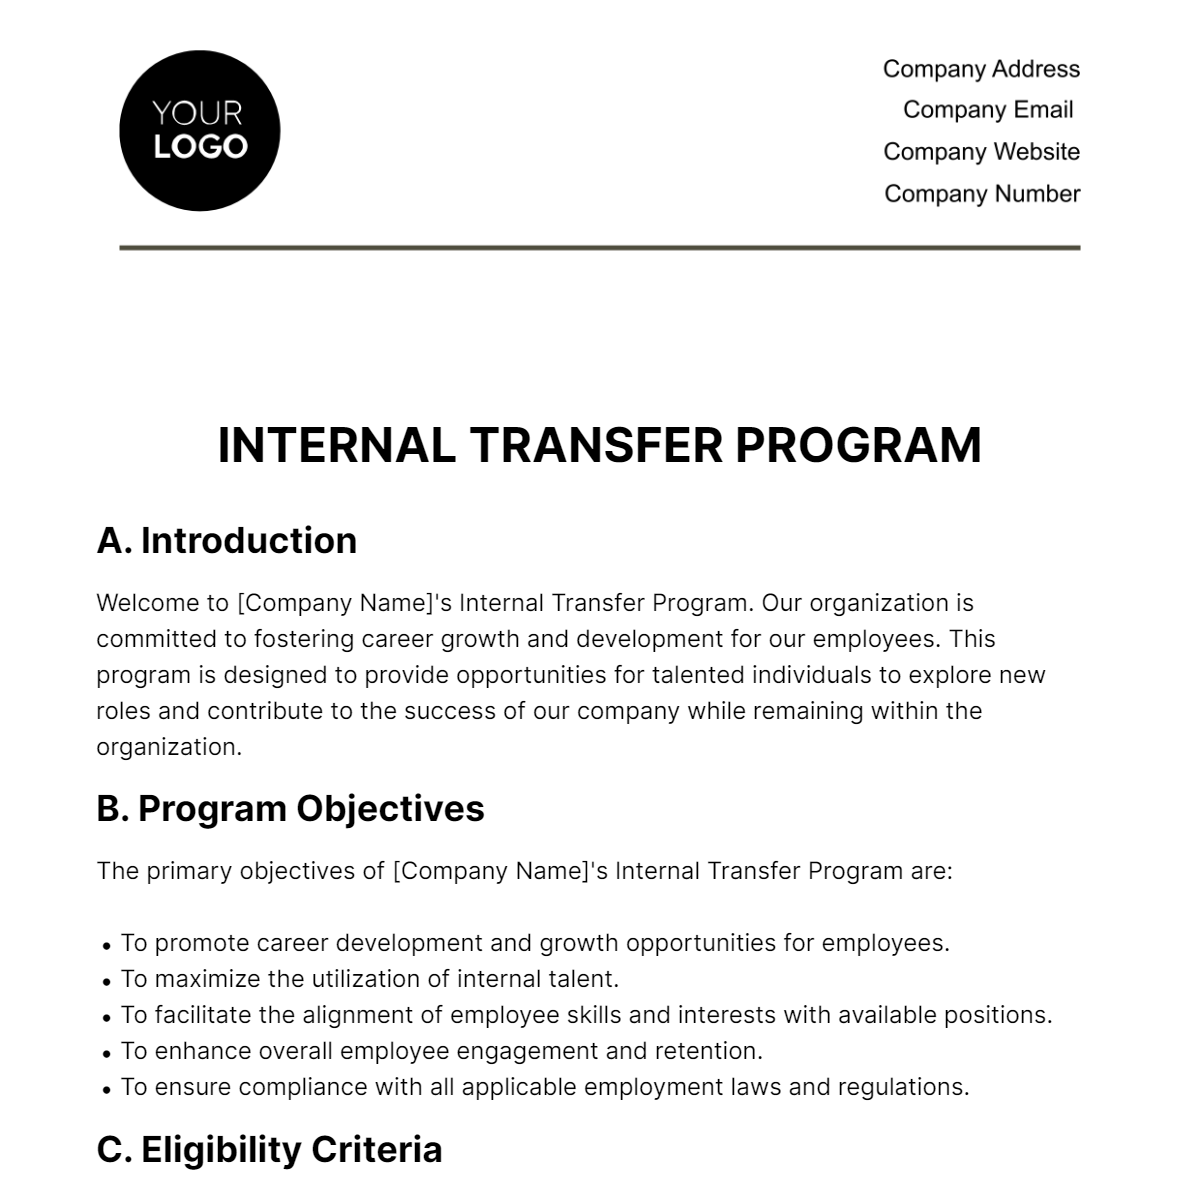 Internal Transfer Program HR Template